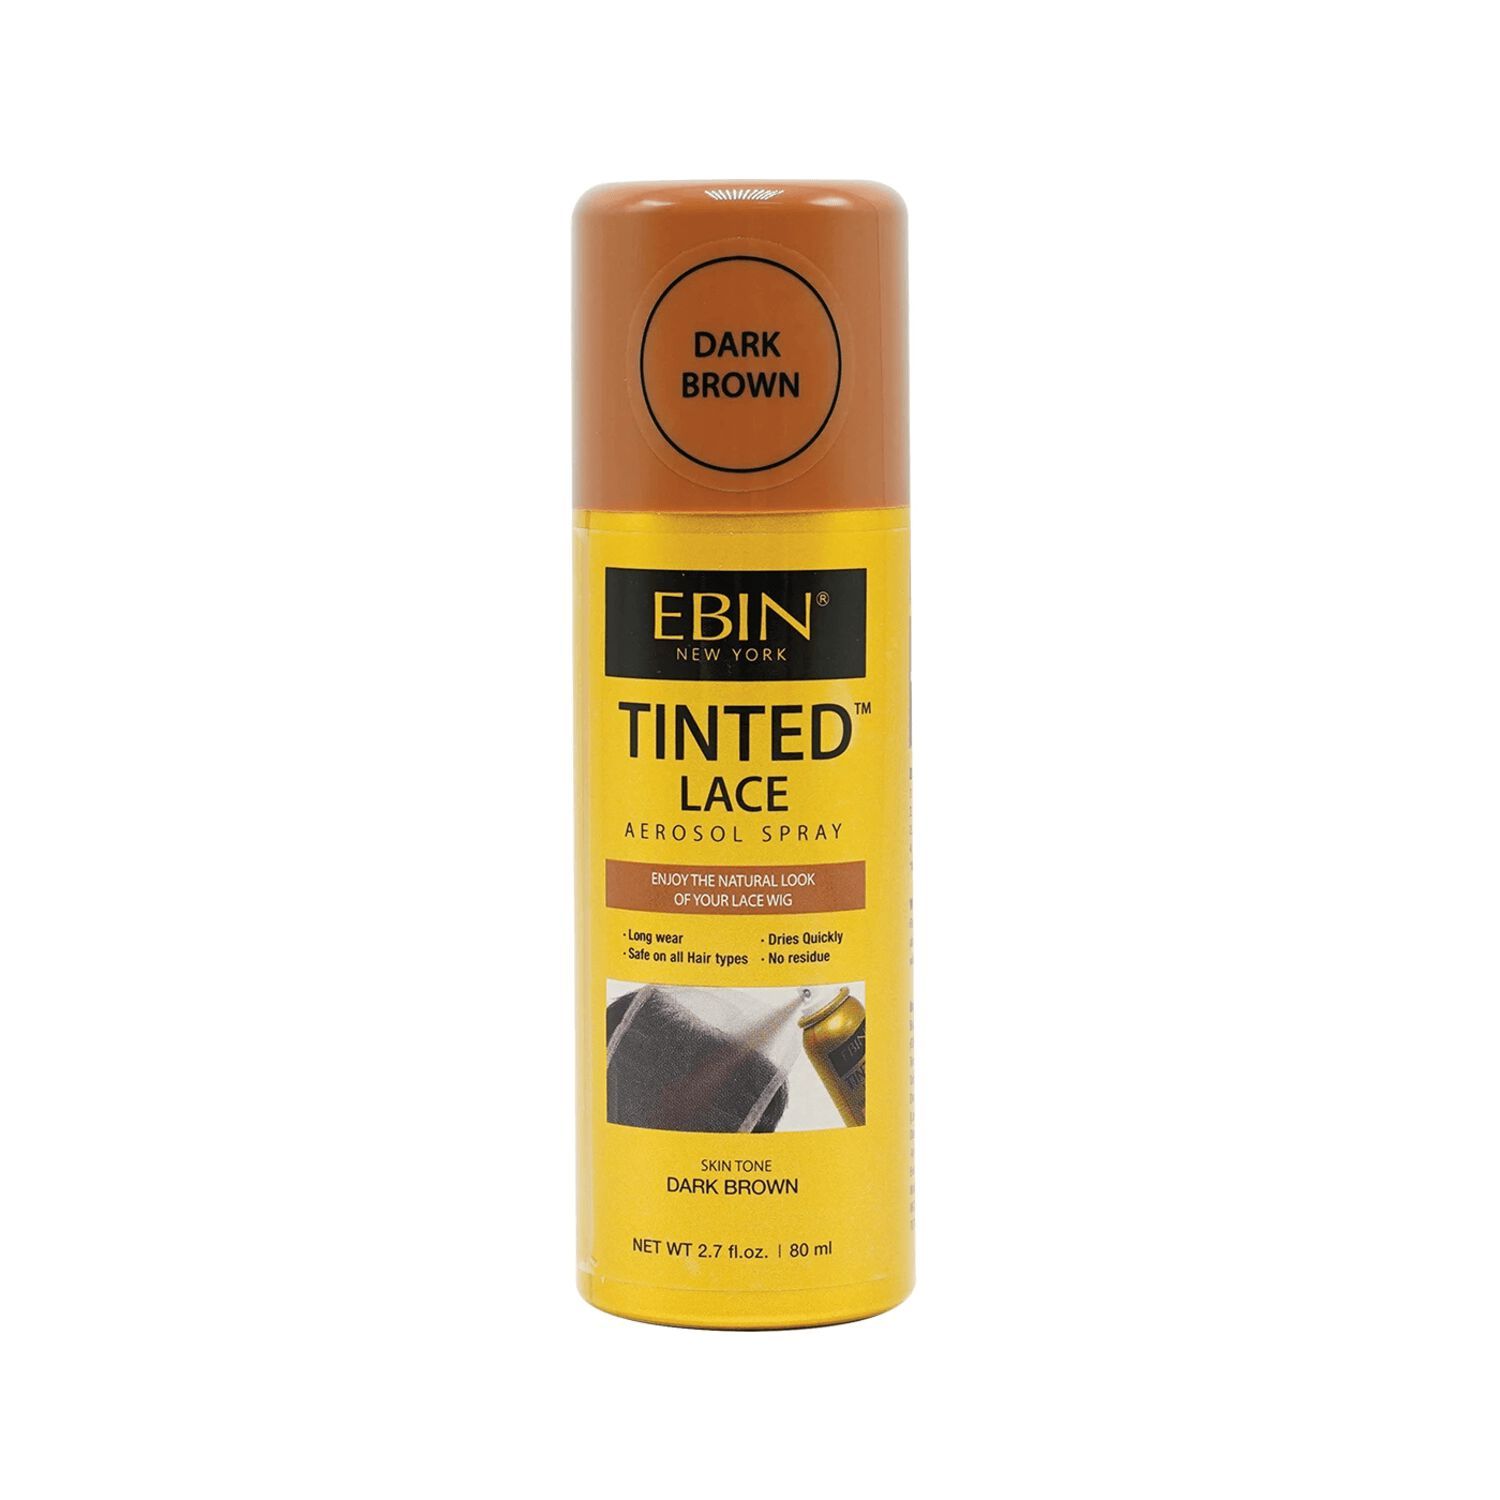 Ebin Tinted Lace Aerosol Spray Dark Brown 2.7 oz.